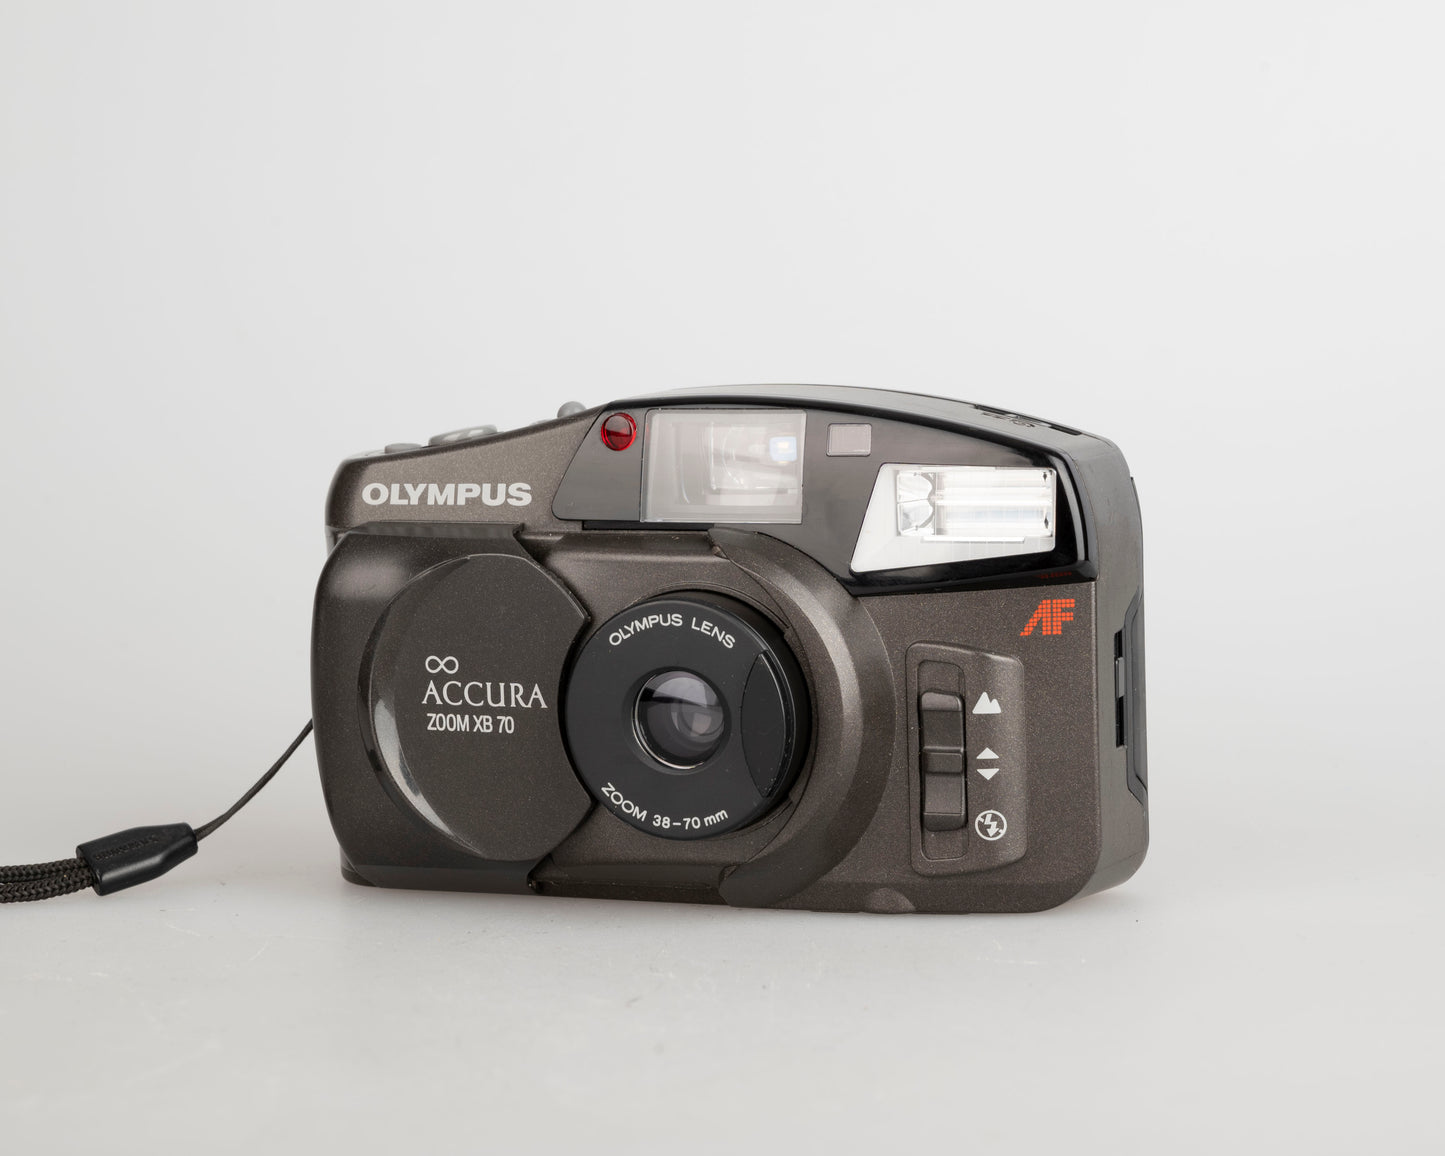 Olympus Infinity Accura Zoom XB70 35mm camera